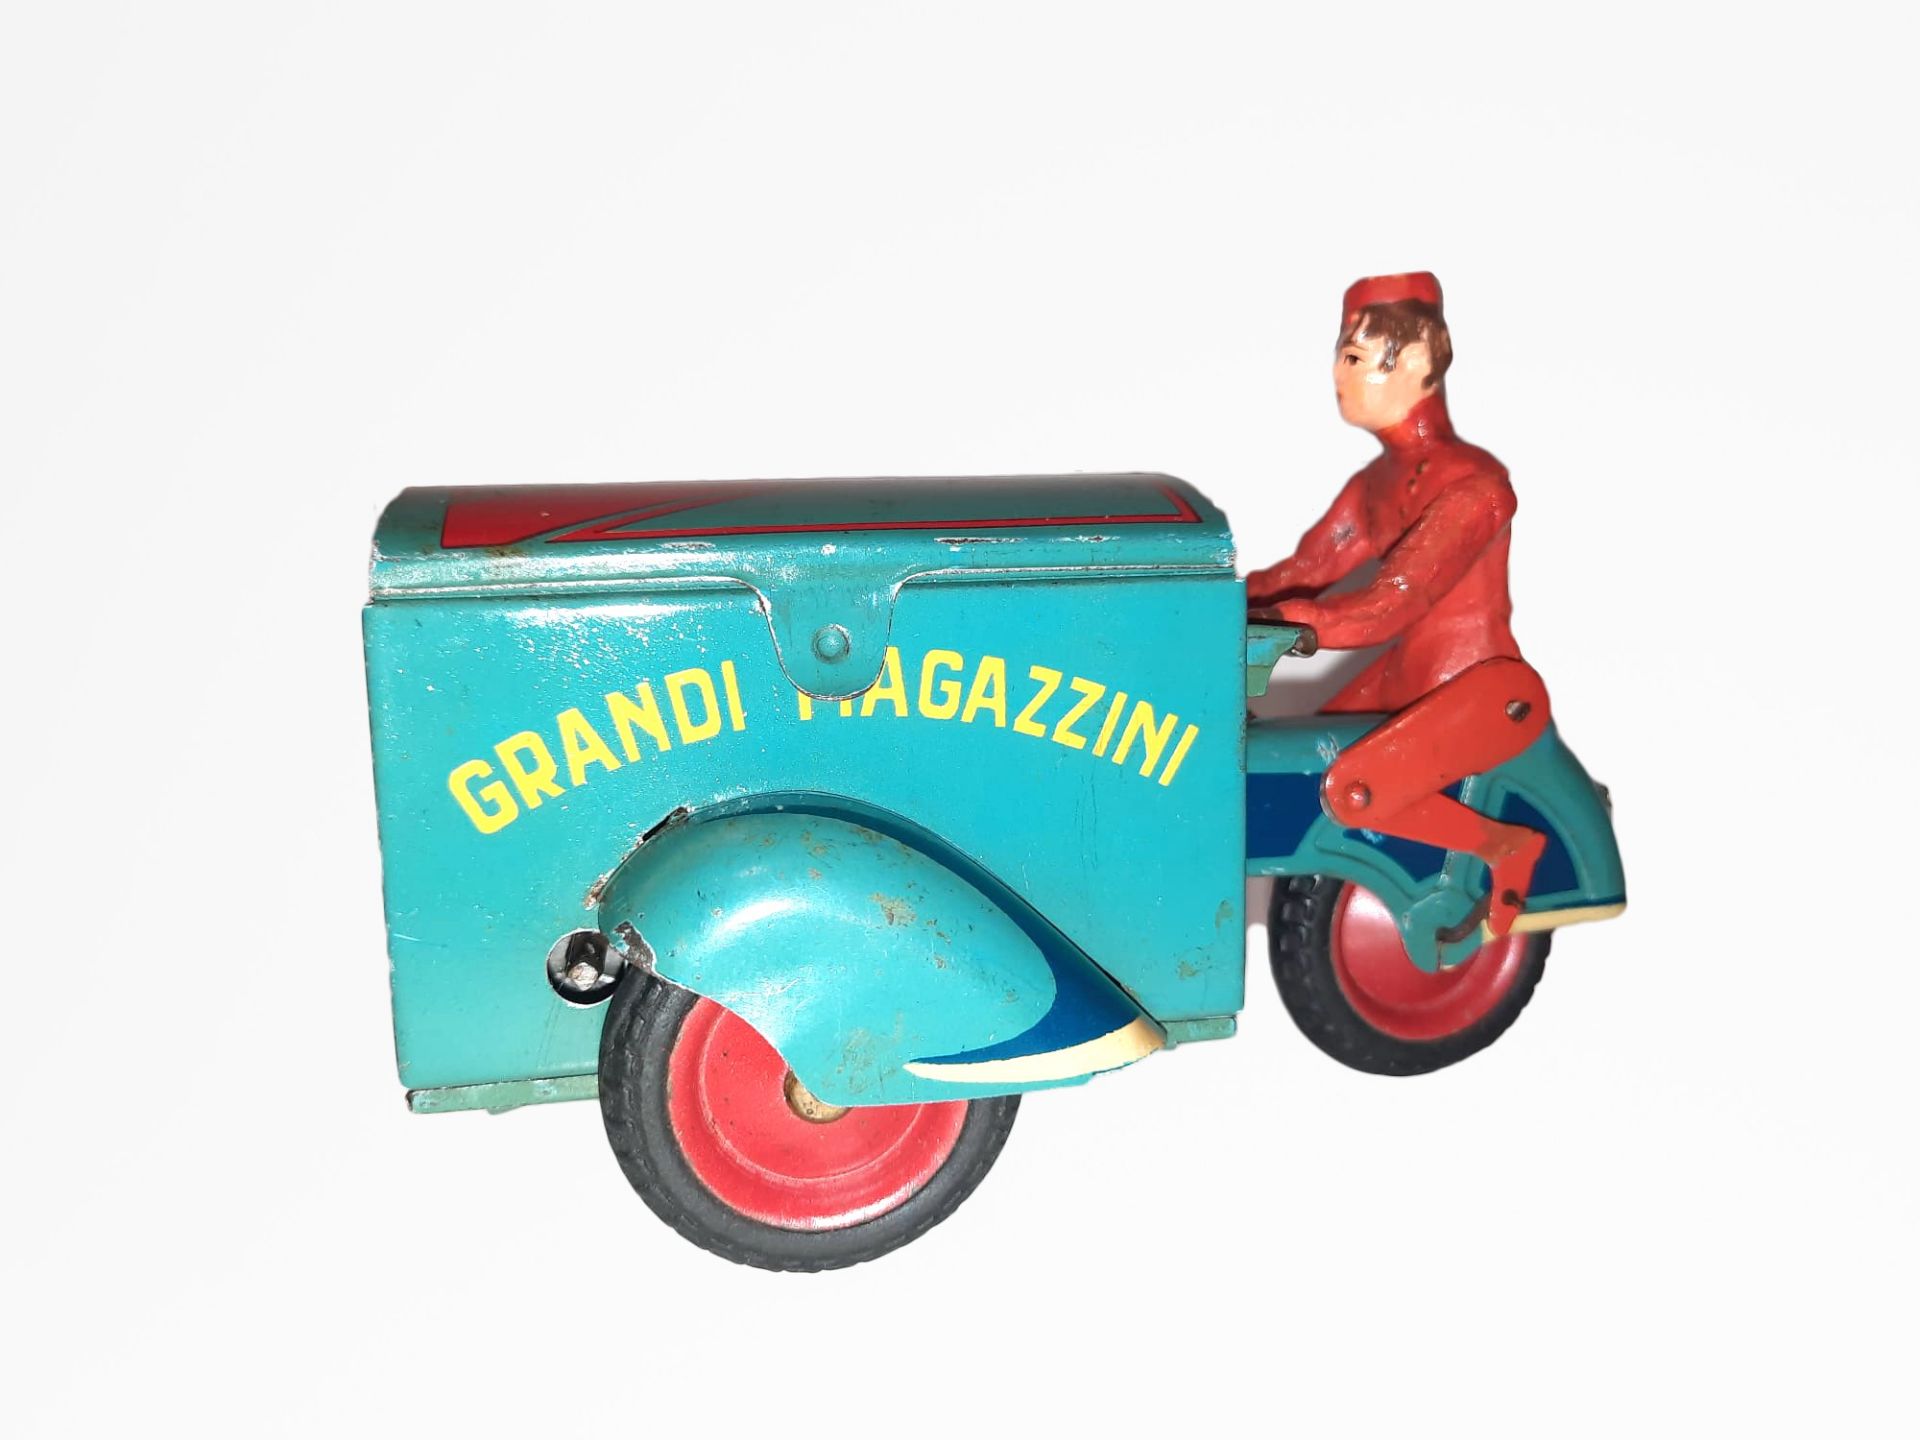 Ingap - Grandi magazzini, 1935 - Image 2 of 3